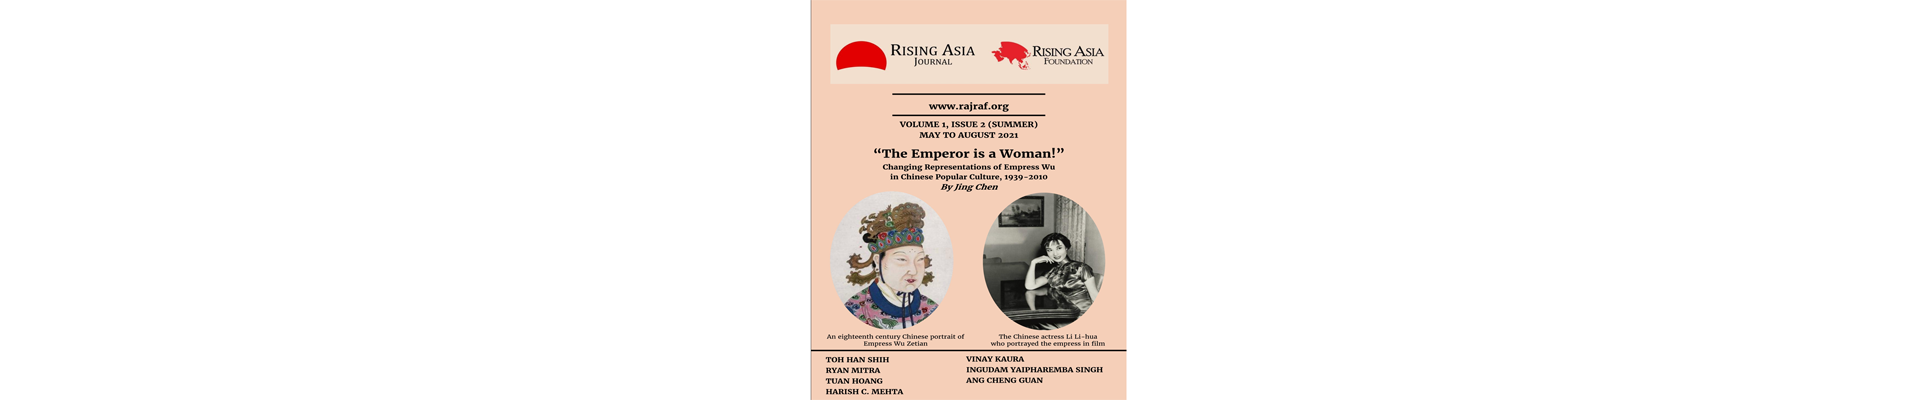 Rising Asia Journal